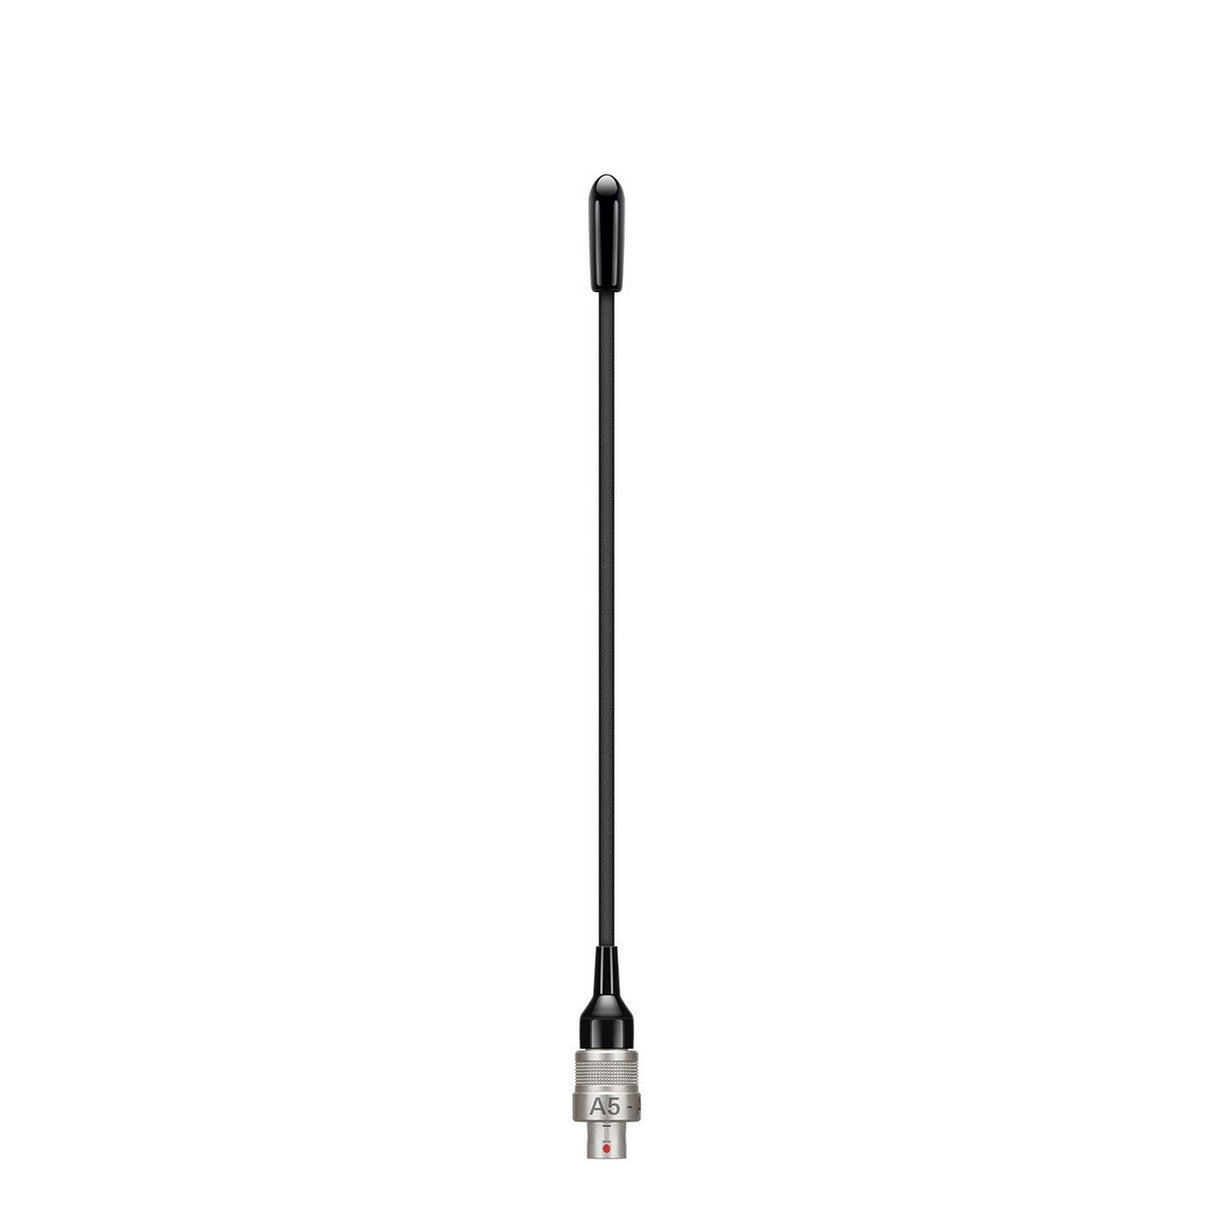 Sennheiser Antenna A5-A8 | Exchangeable Antenna A5-A8 Band with Coaxial Connector